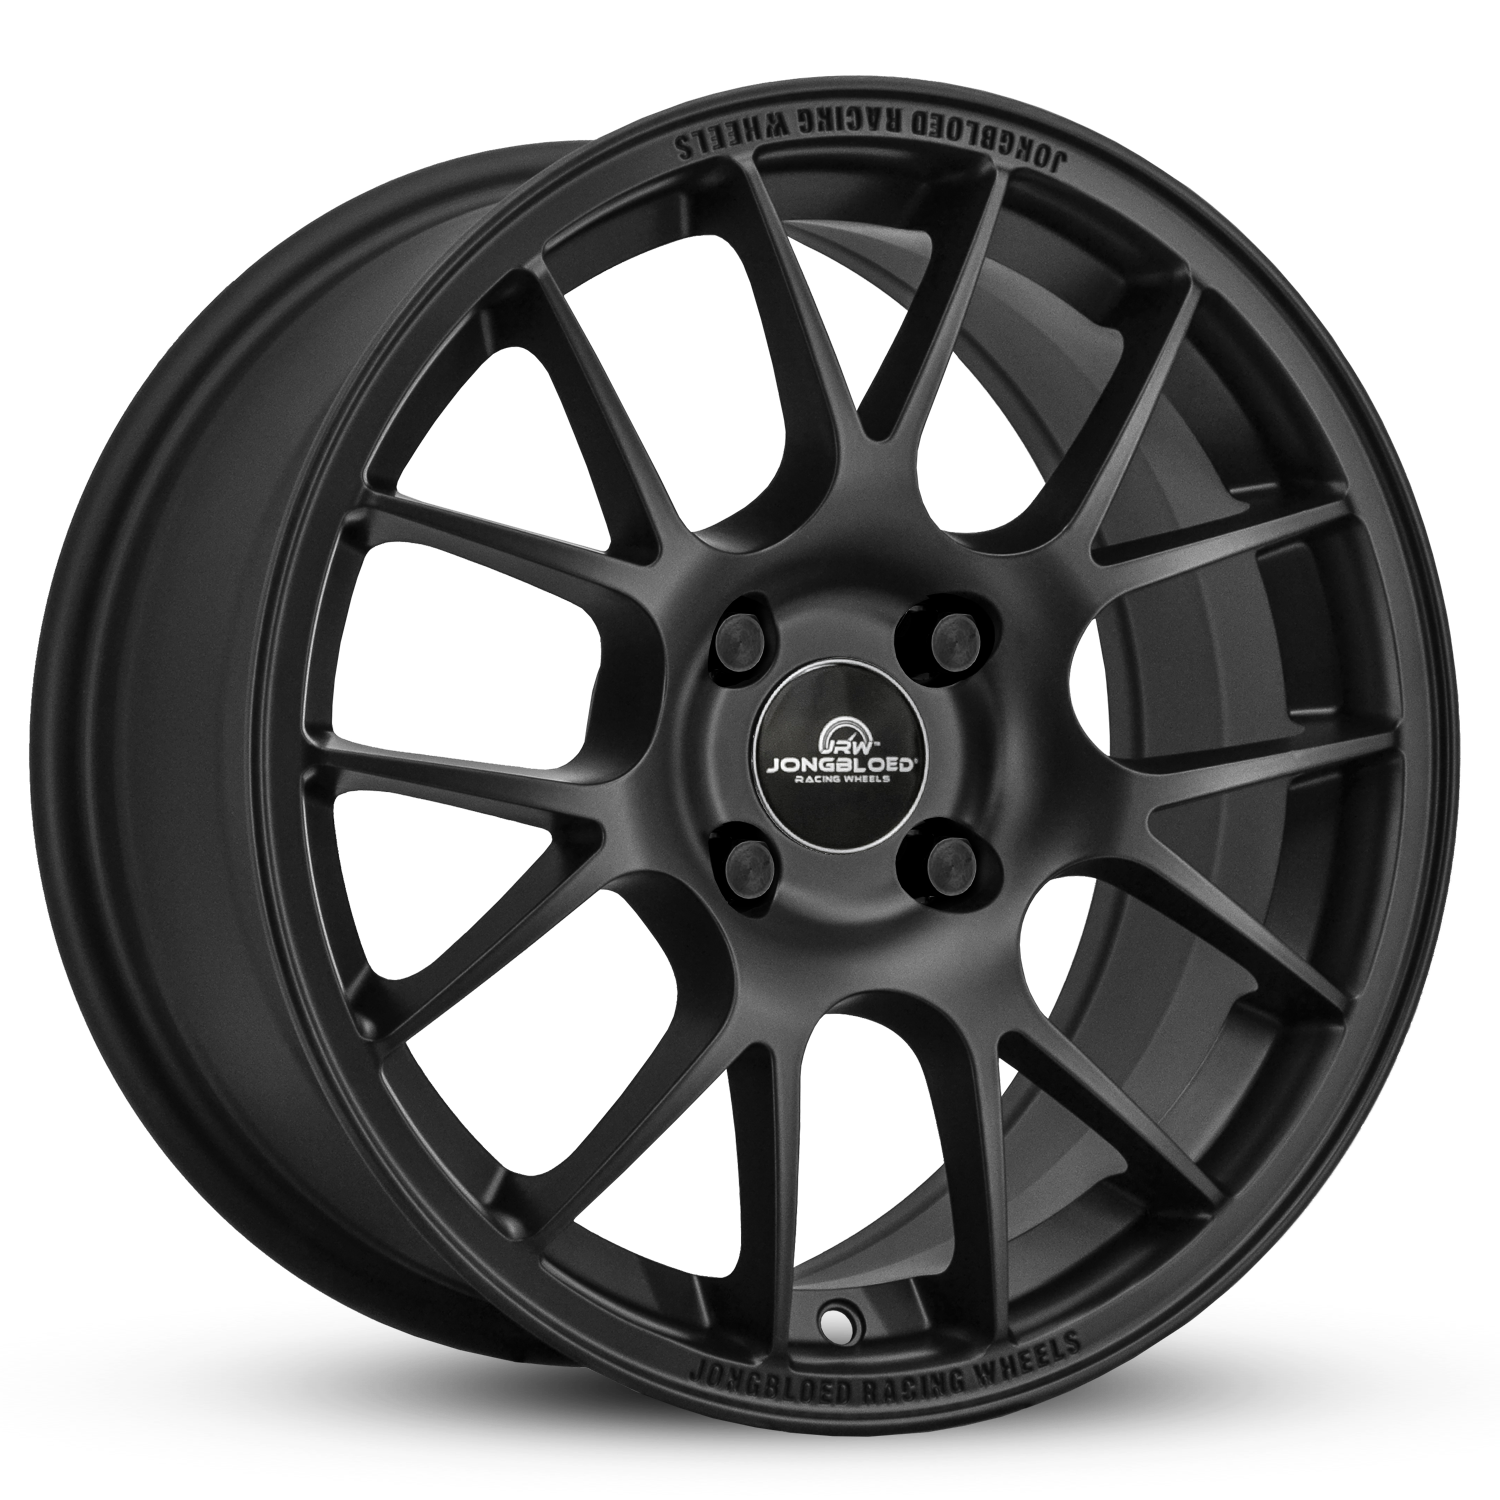 Jongbloed Racing Wheels SPEC MIATA PTS Series 400 Racing Wheel Rims in All Satin Black 